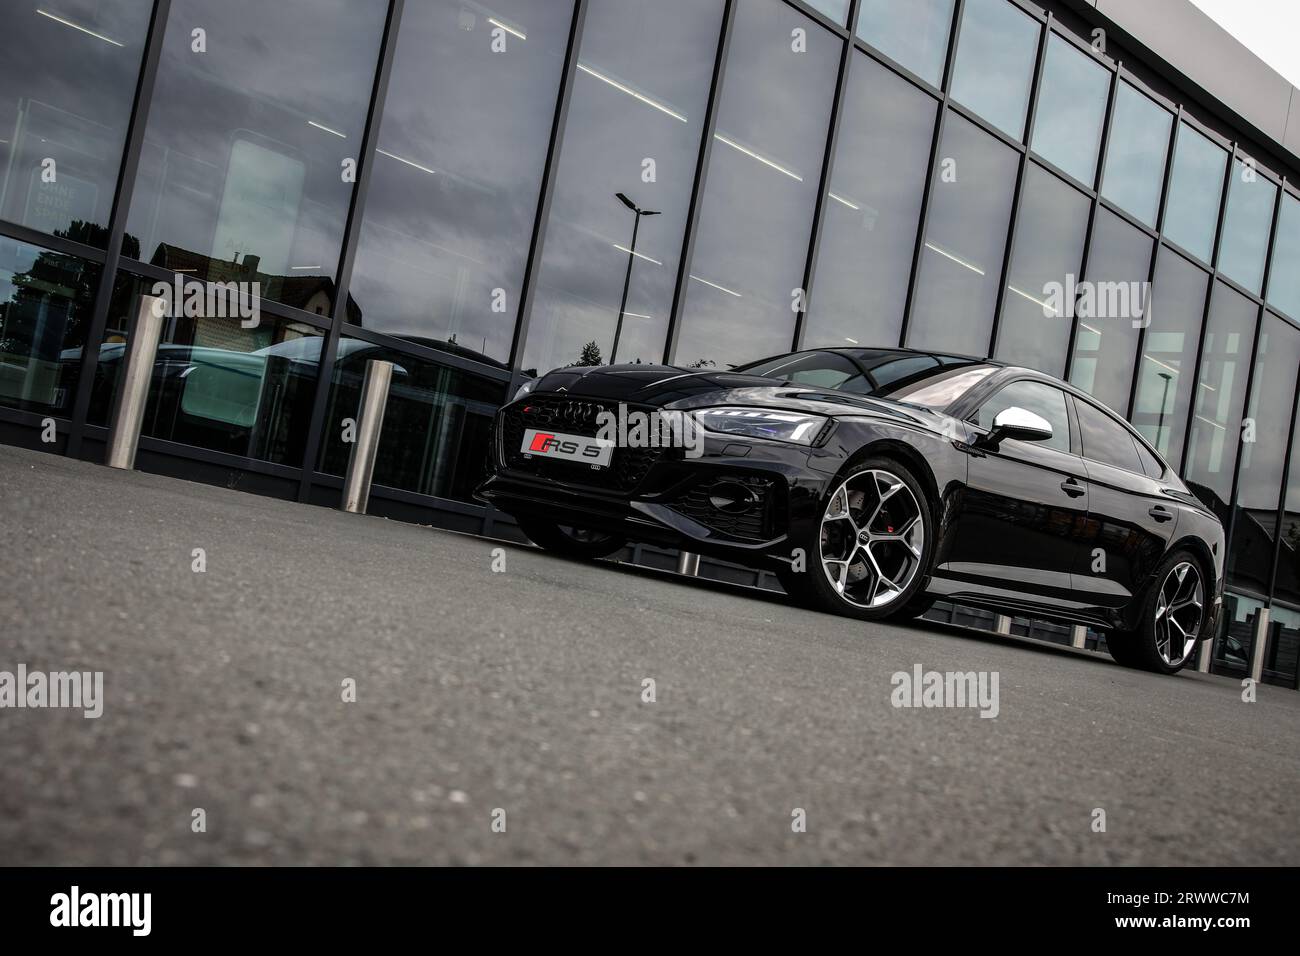 Audi S7 tuning Stockfotografie - Alamy